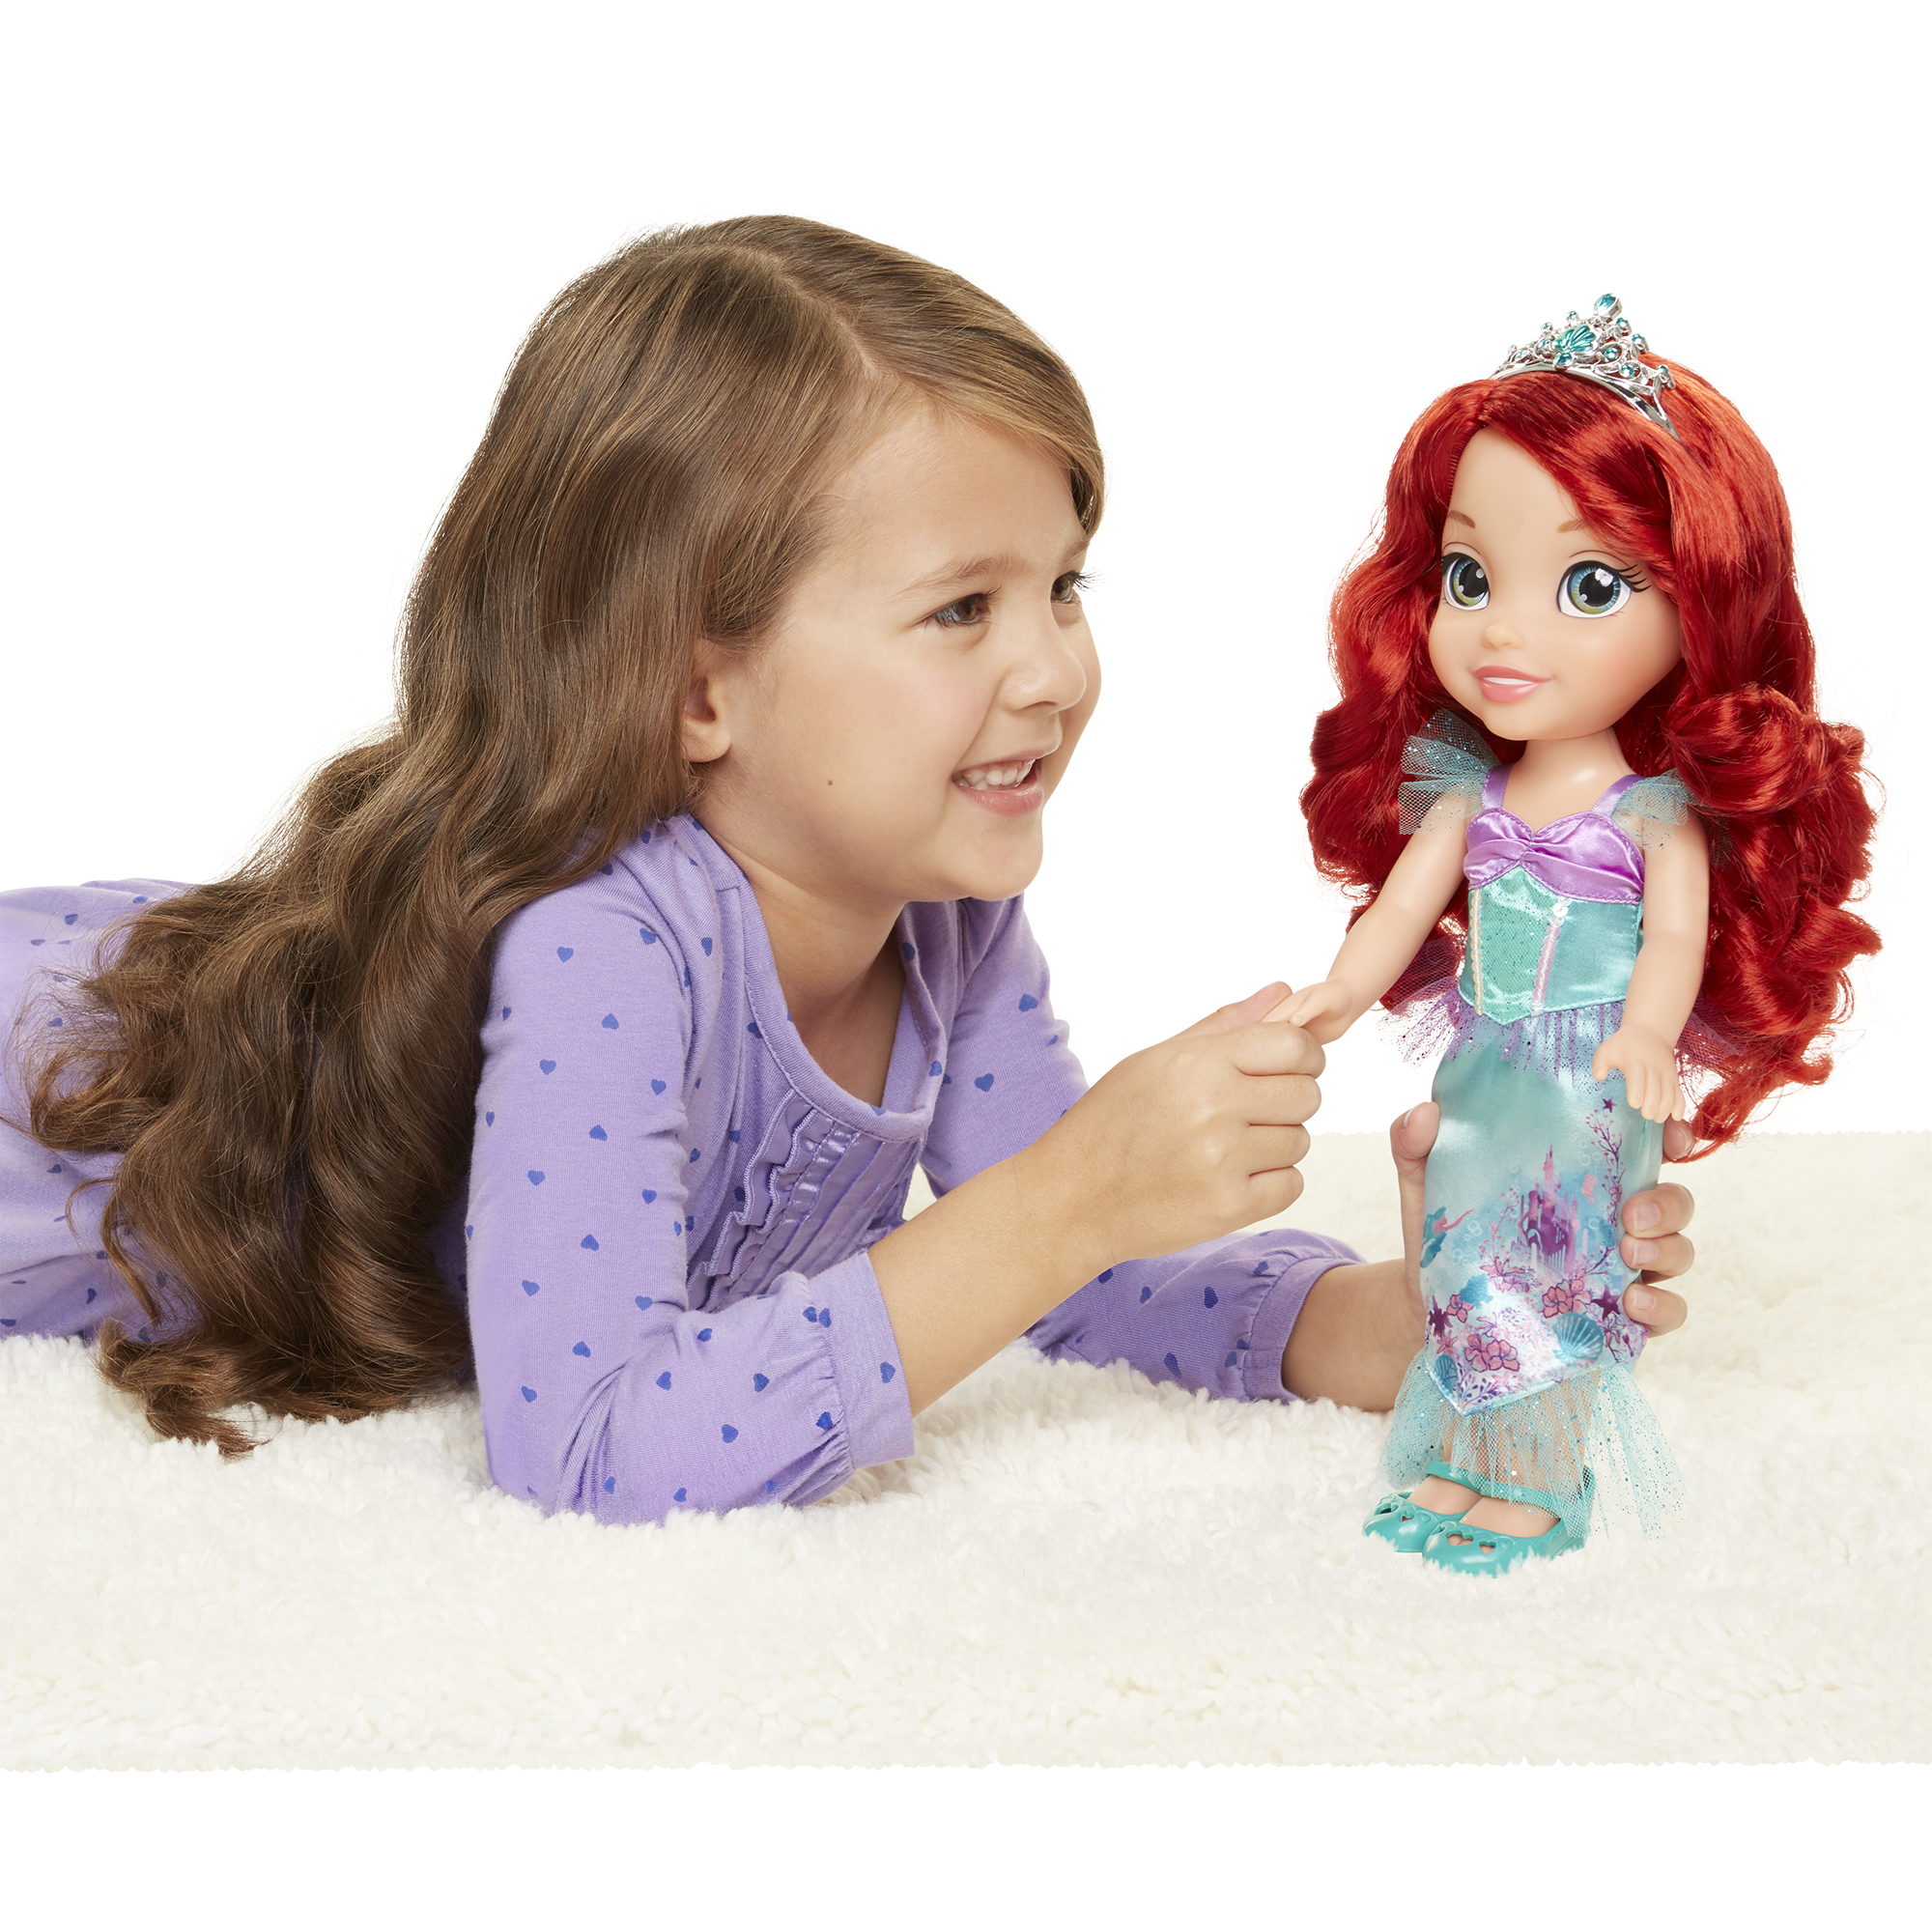 Disney Princess Explore Your World Ariel Large Fashion Doll - image 2 of 6